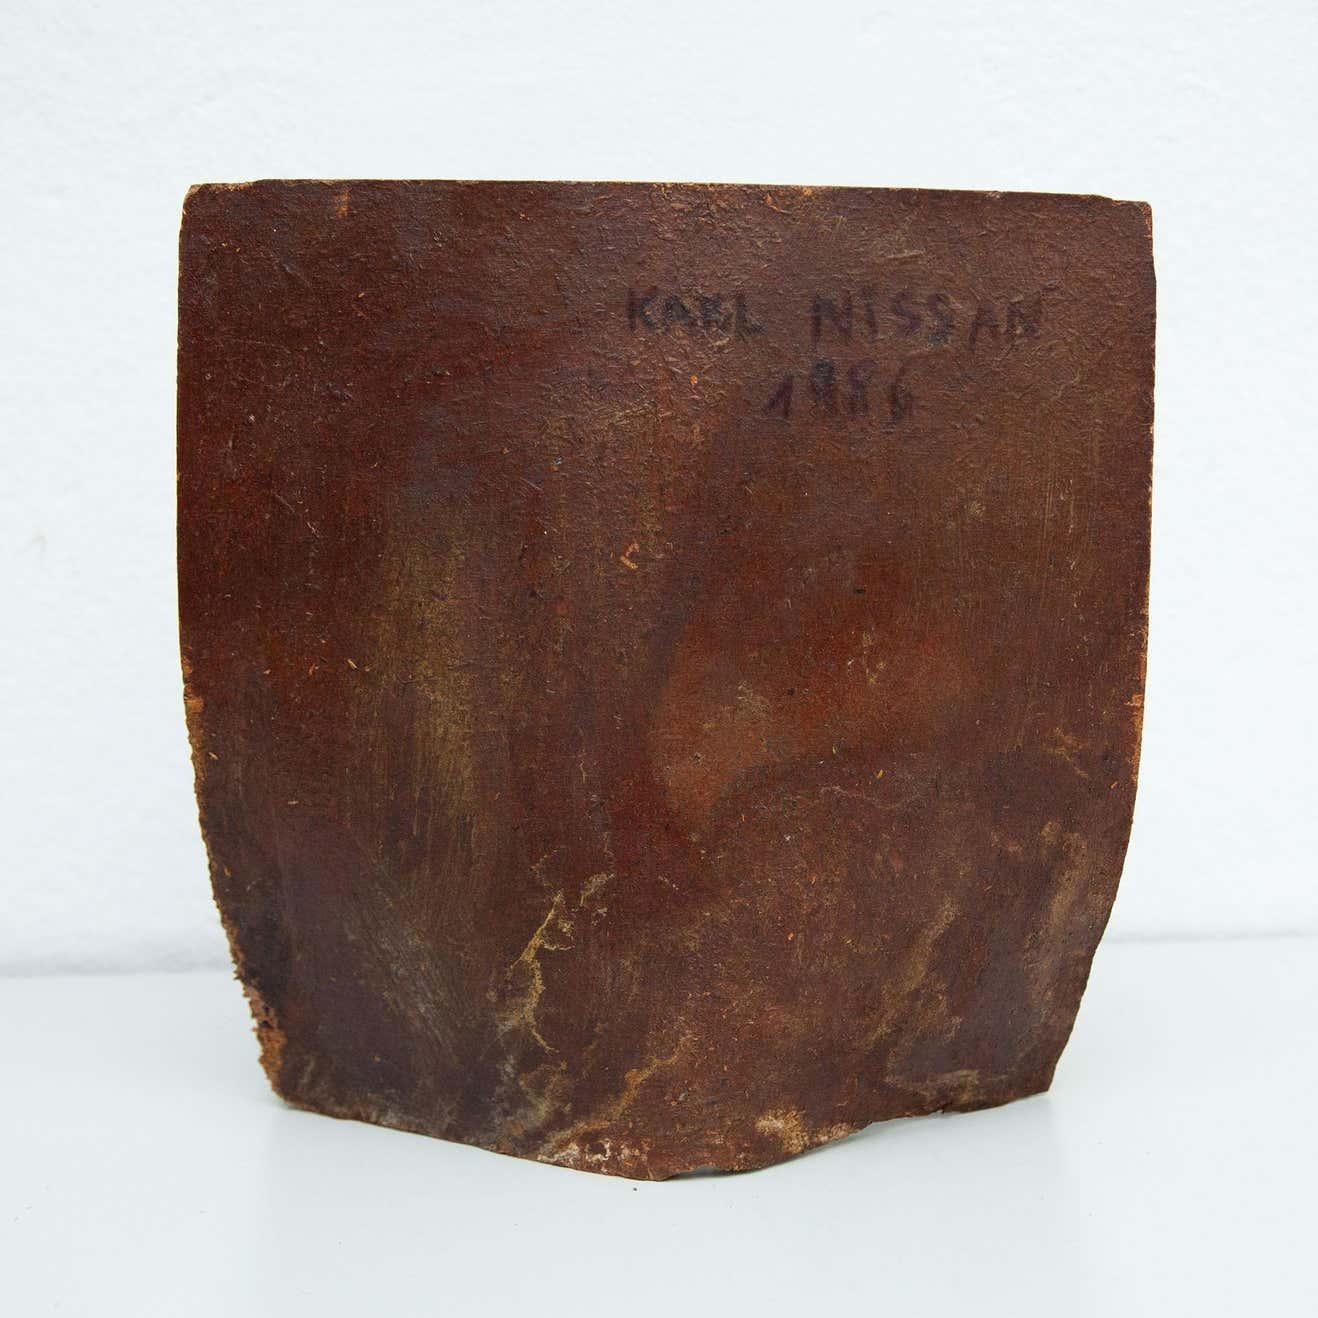 Karl Nissan Sculpture, circa 1986 For Sale 4